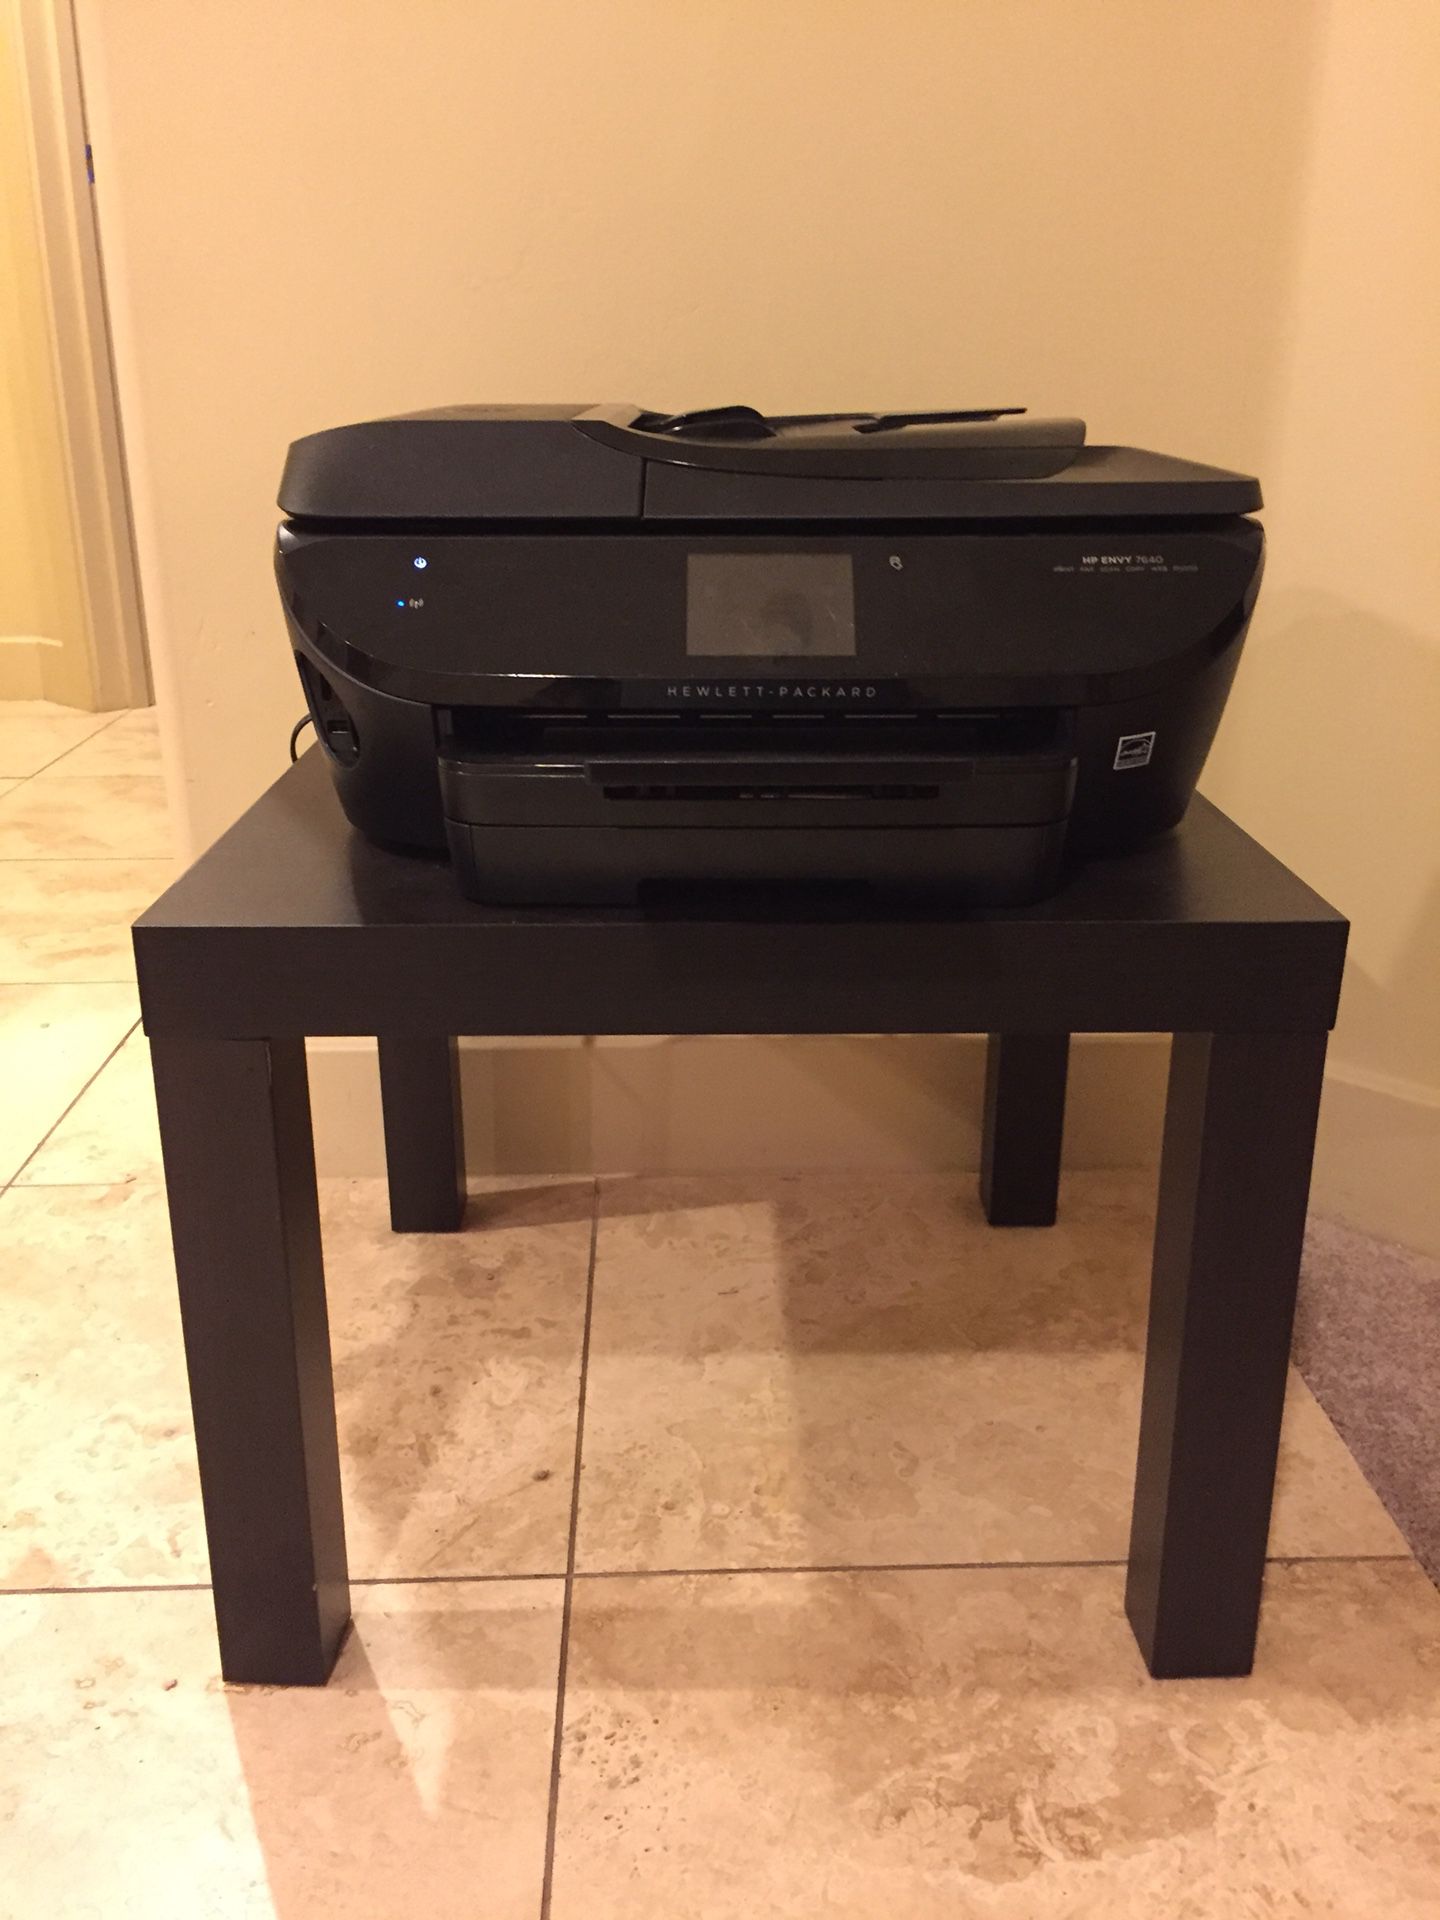 Printer + stand